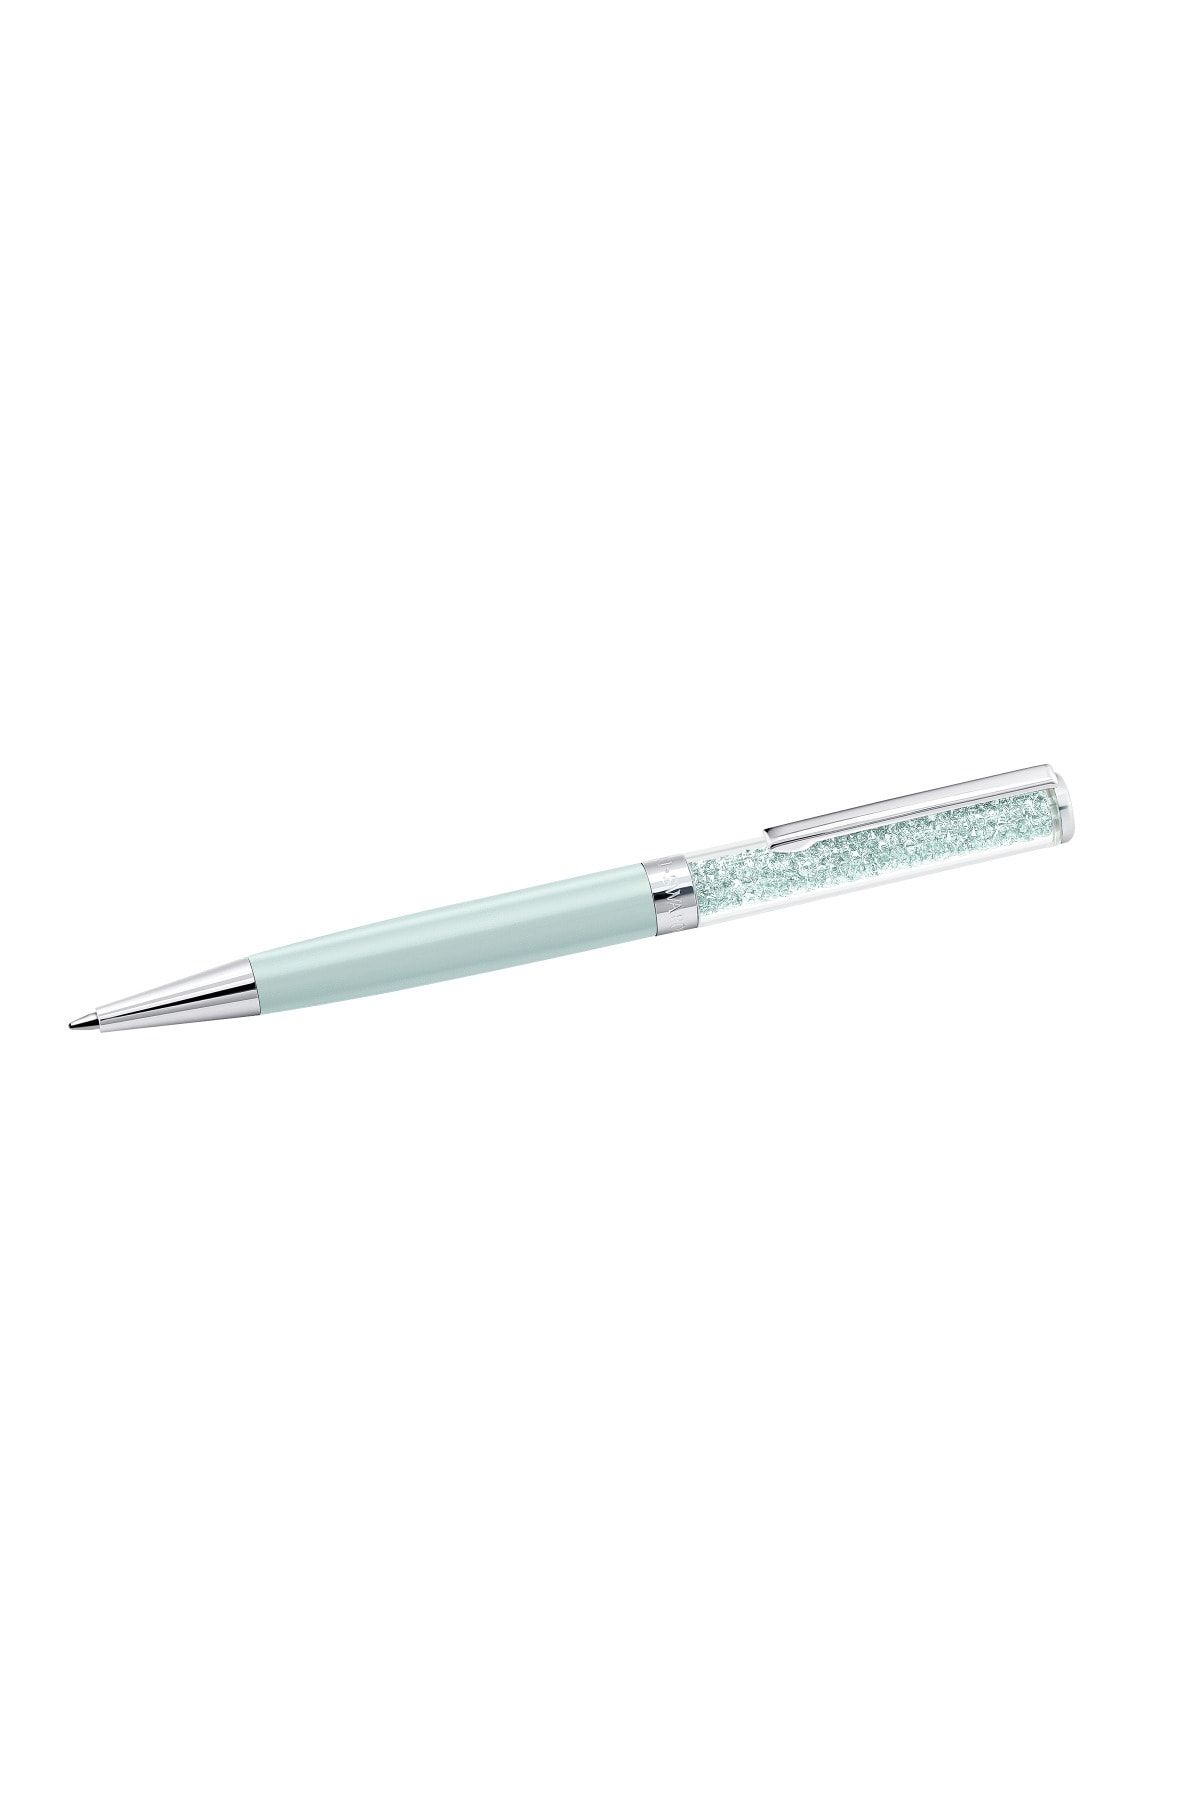 Swarovski Kalem Crystalline Bp Pen - Light Green 5351072